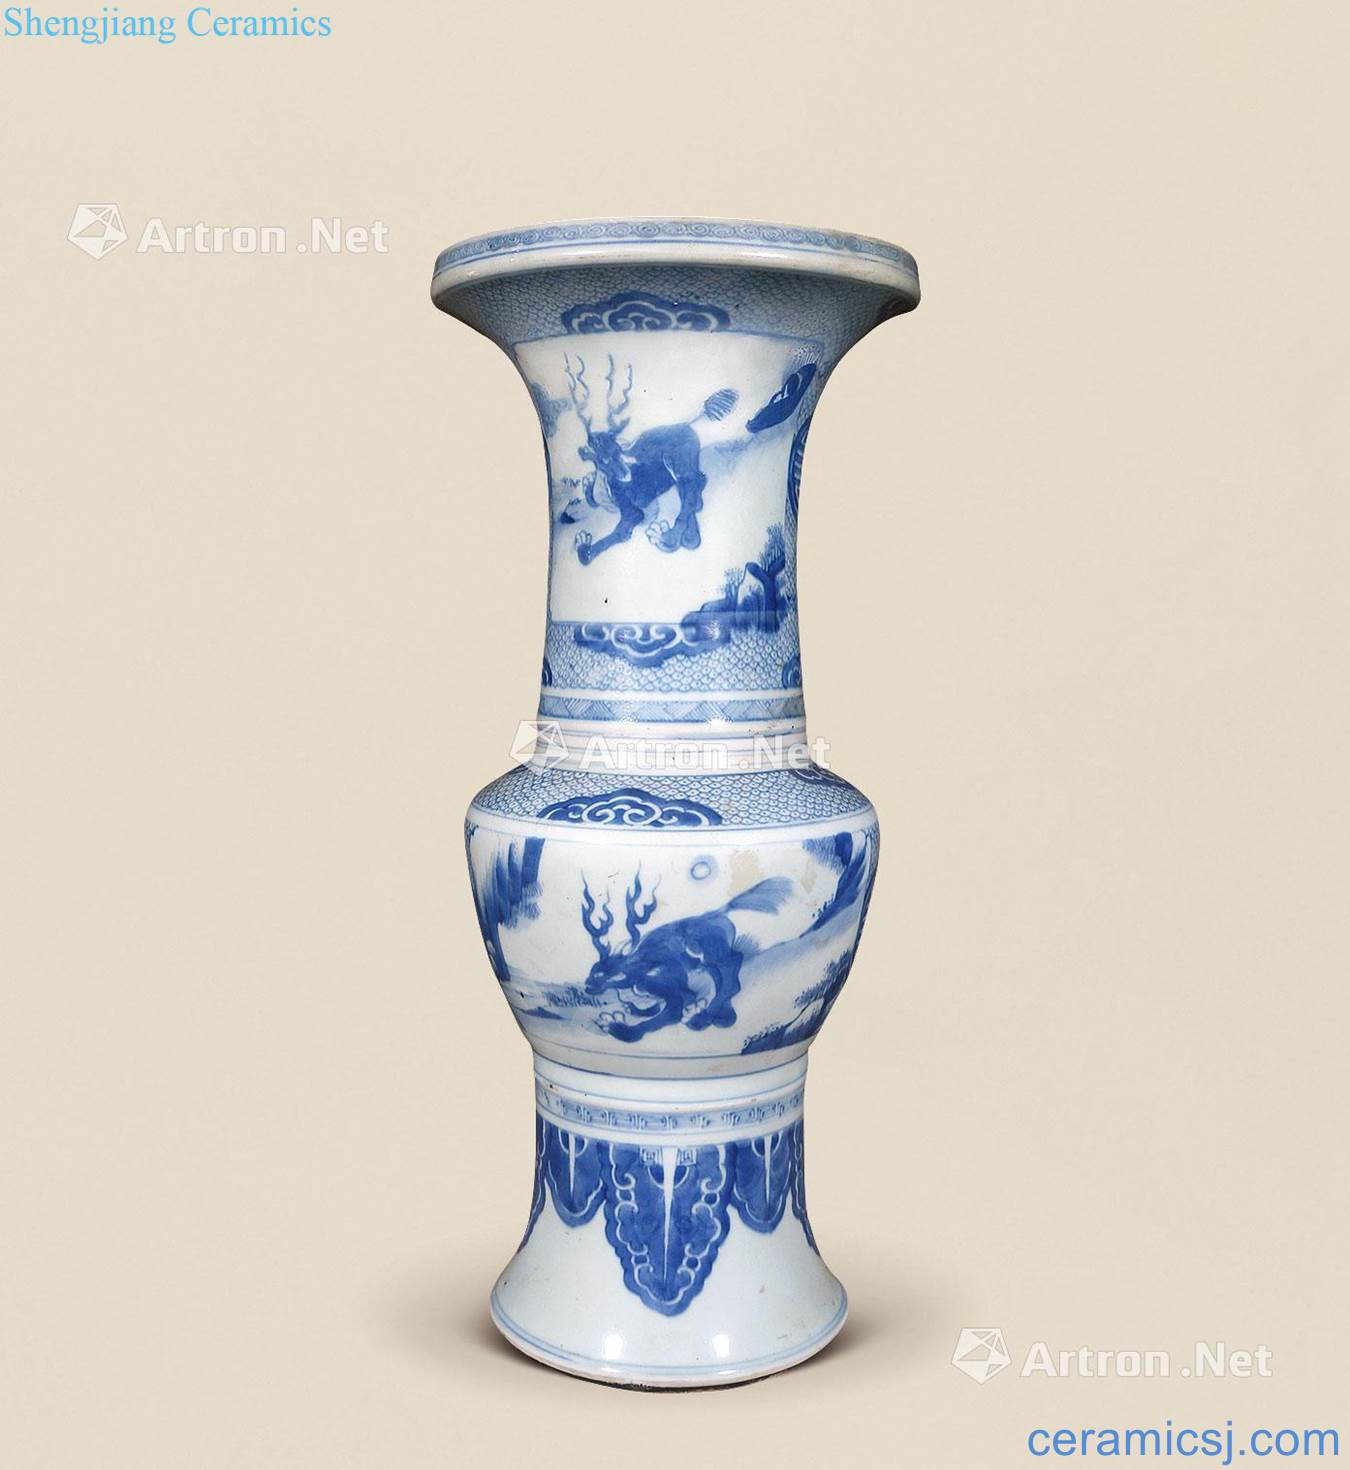 The qing emperor kangxi porcelain medallion benevolent grain vase with flowers